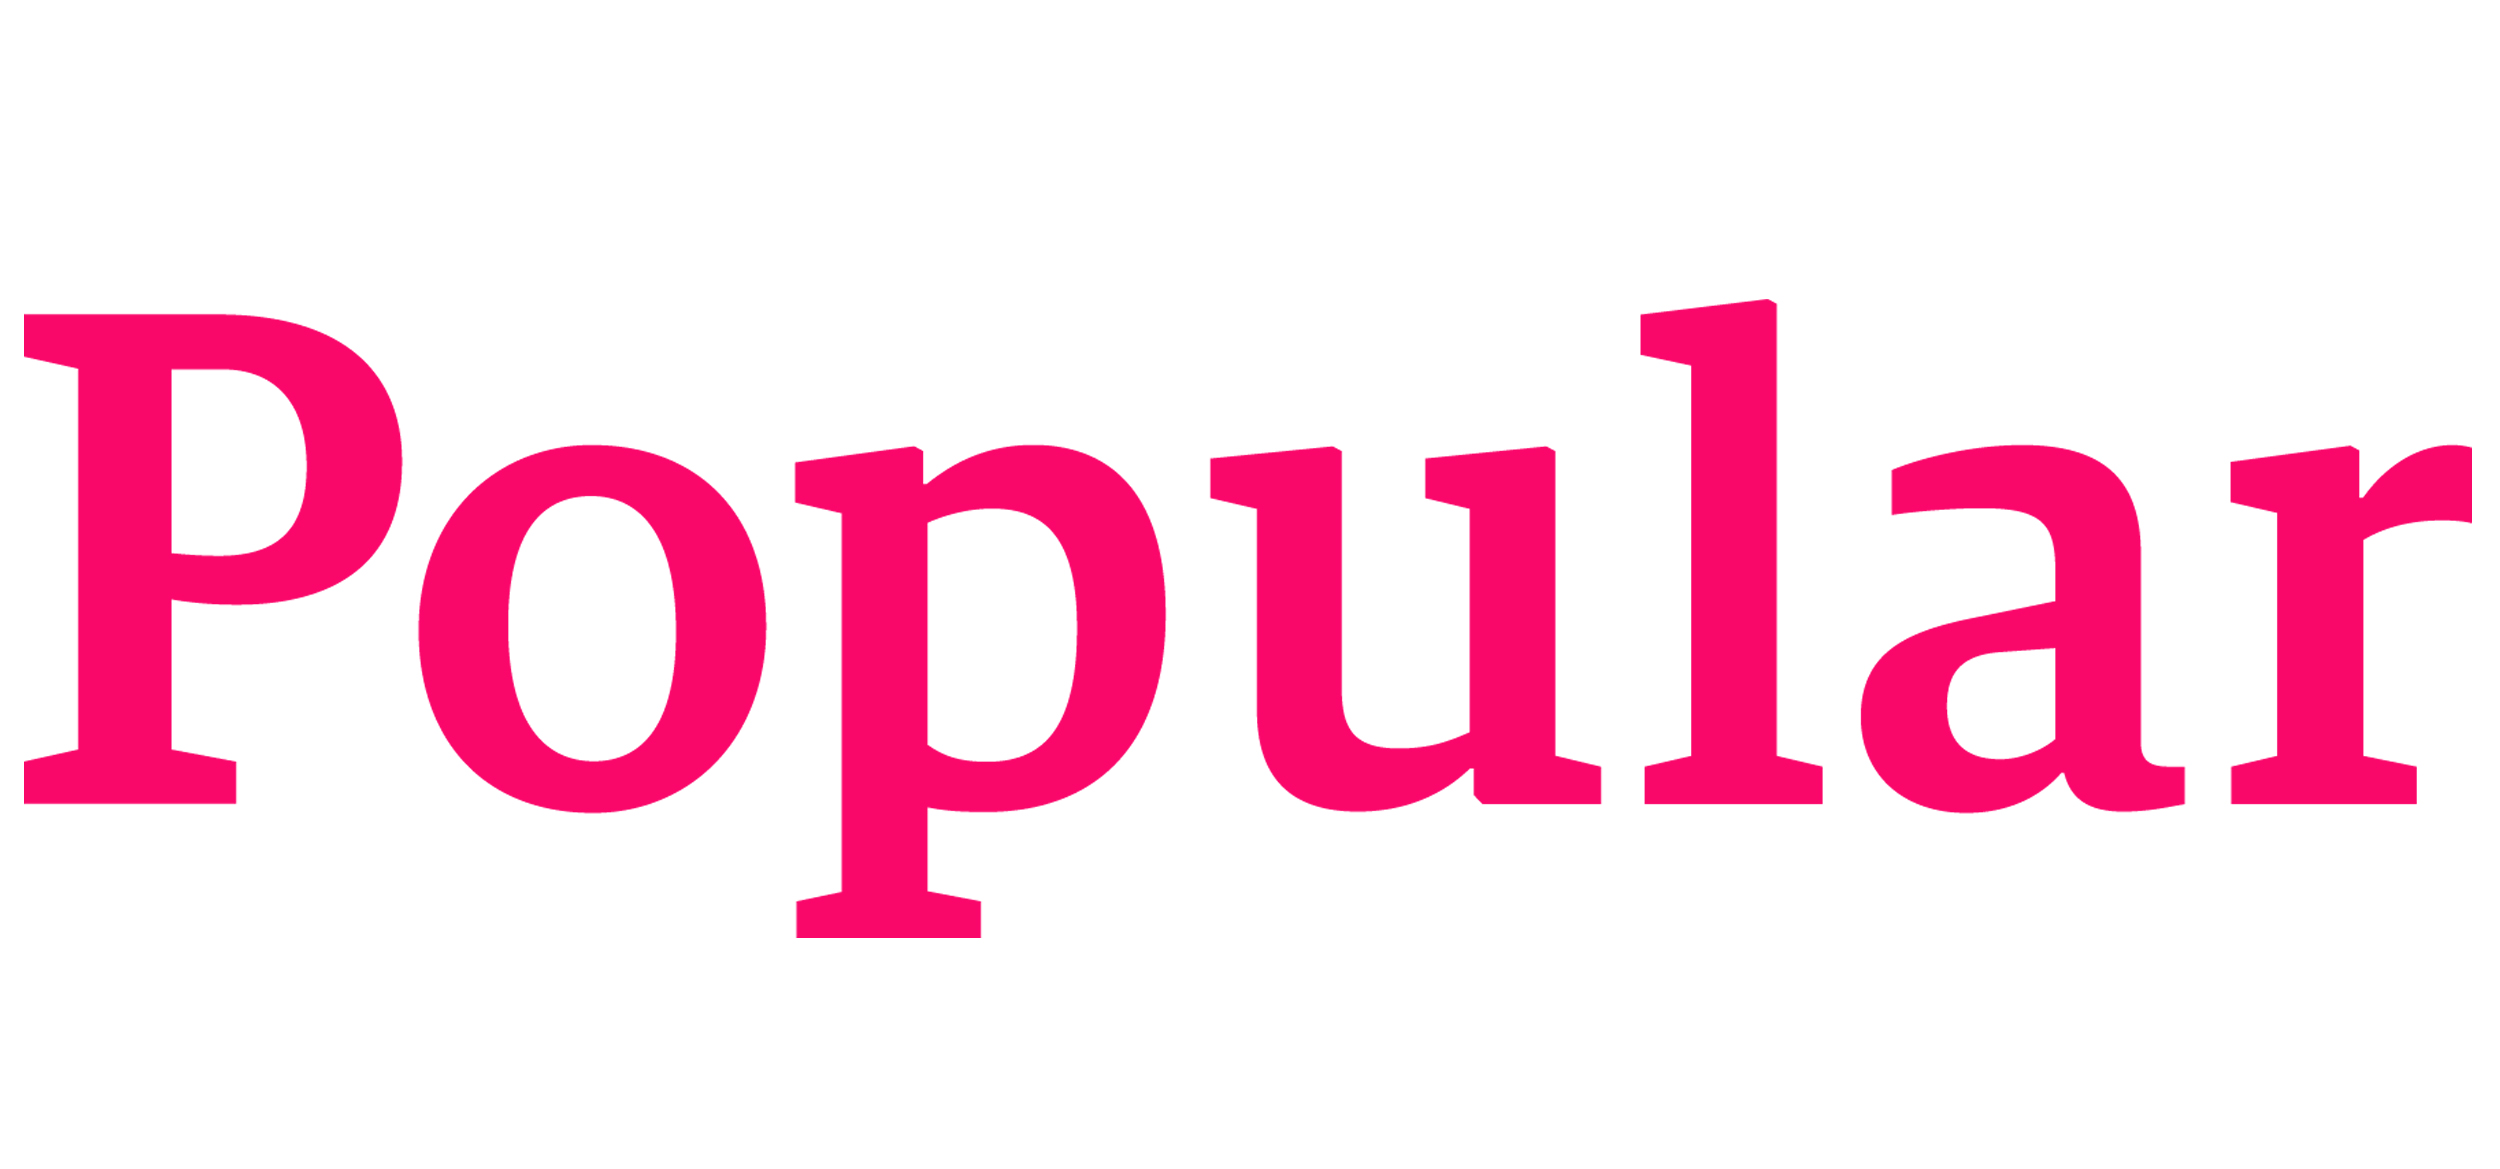 Banco Popular Español Brand Logo